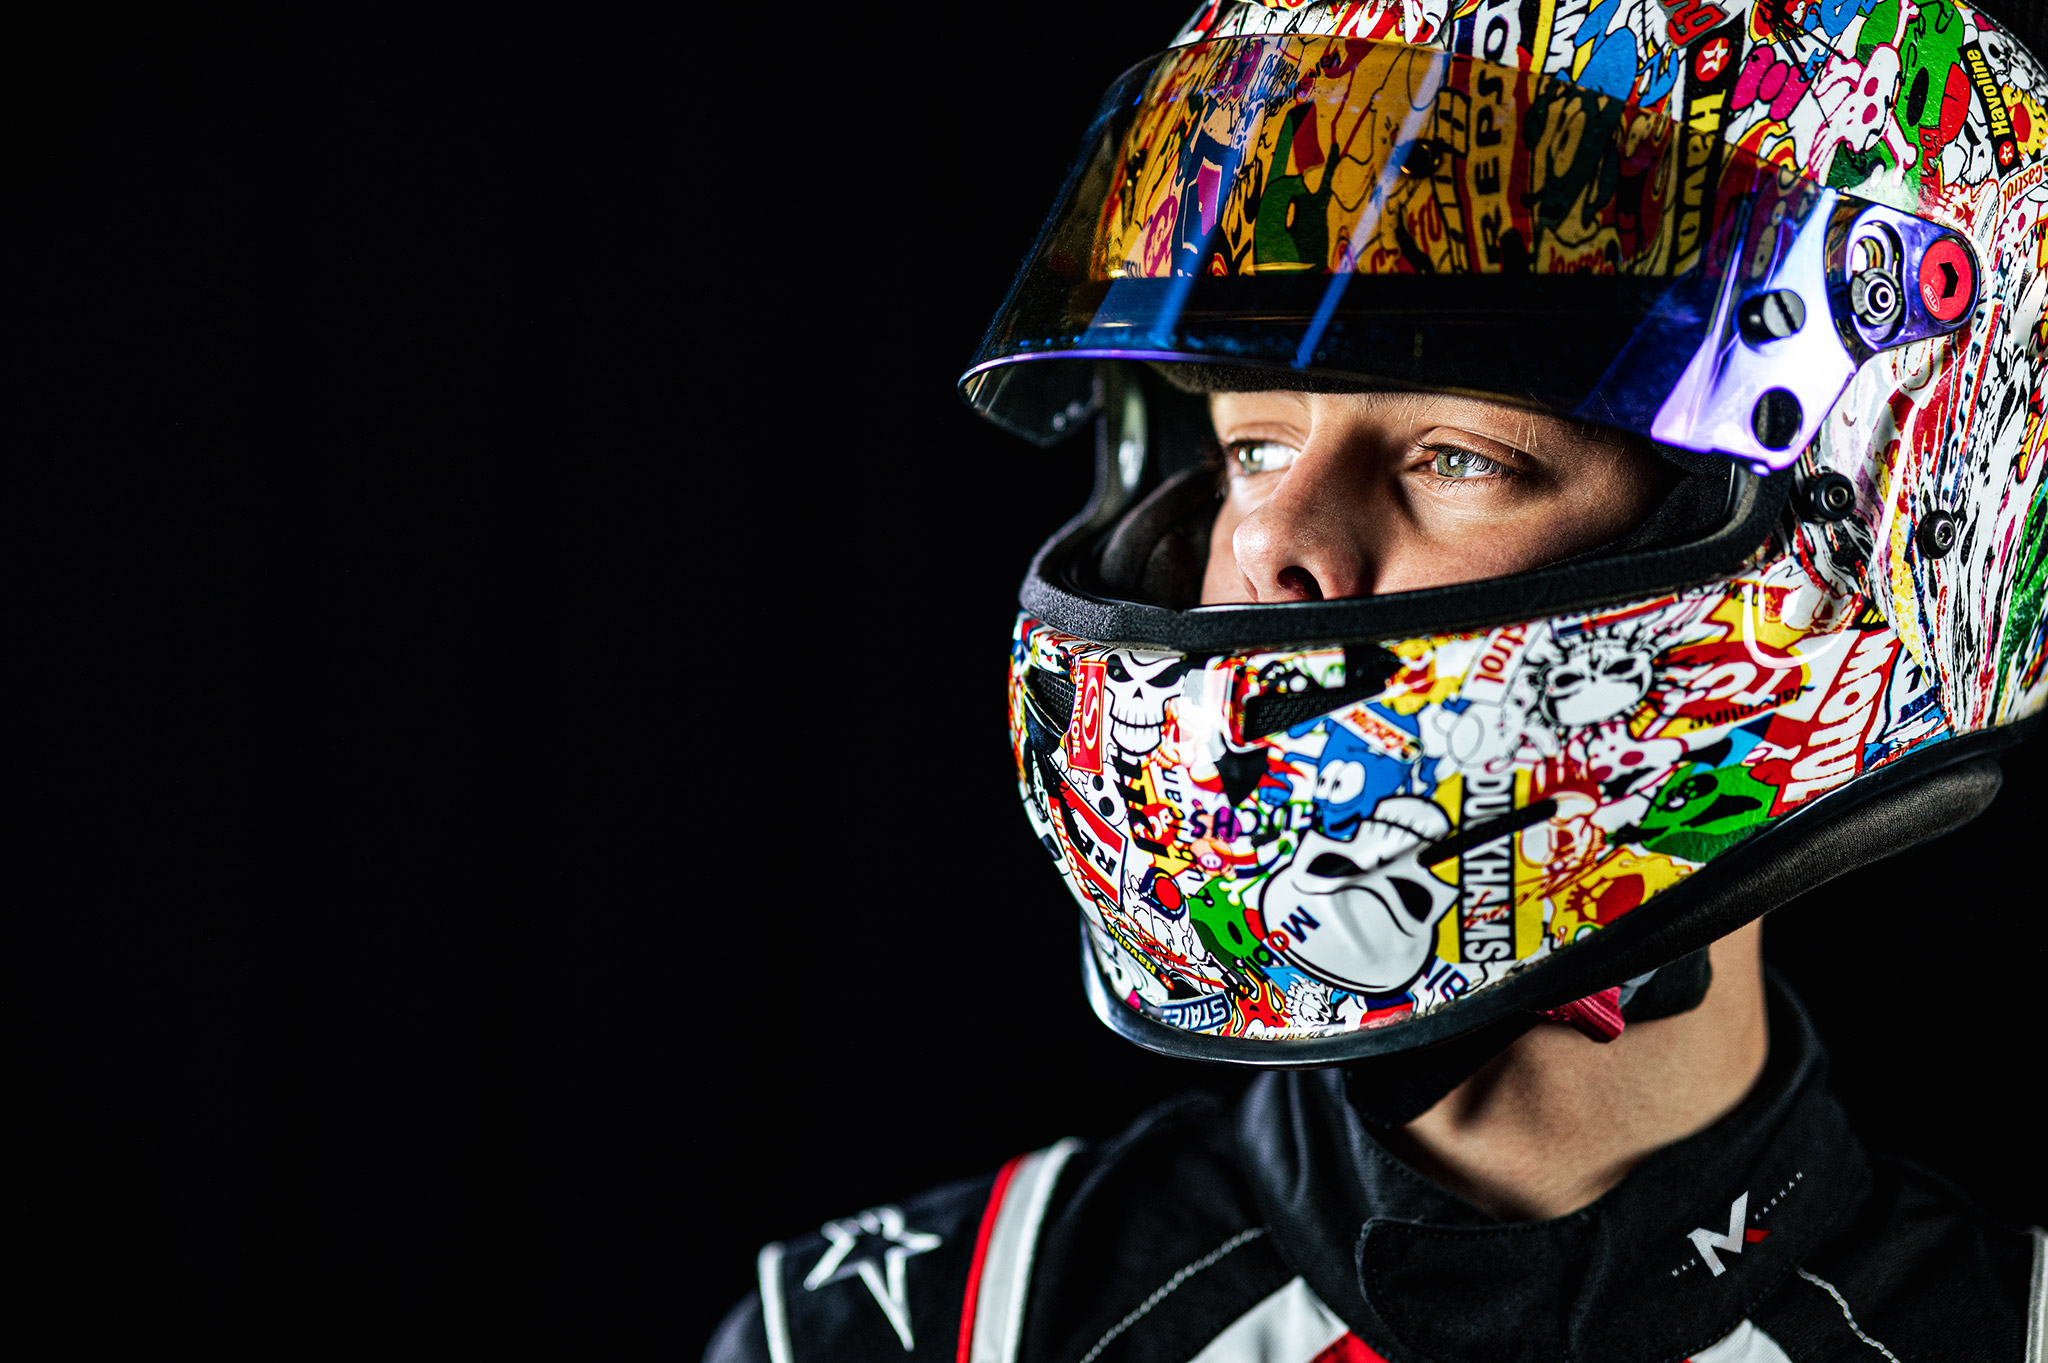 Max Karhan to make his debut in Formula 4 at Autodrom Most